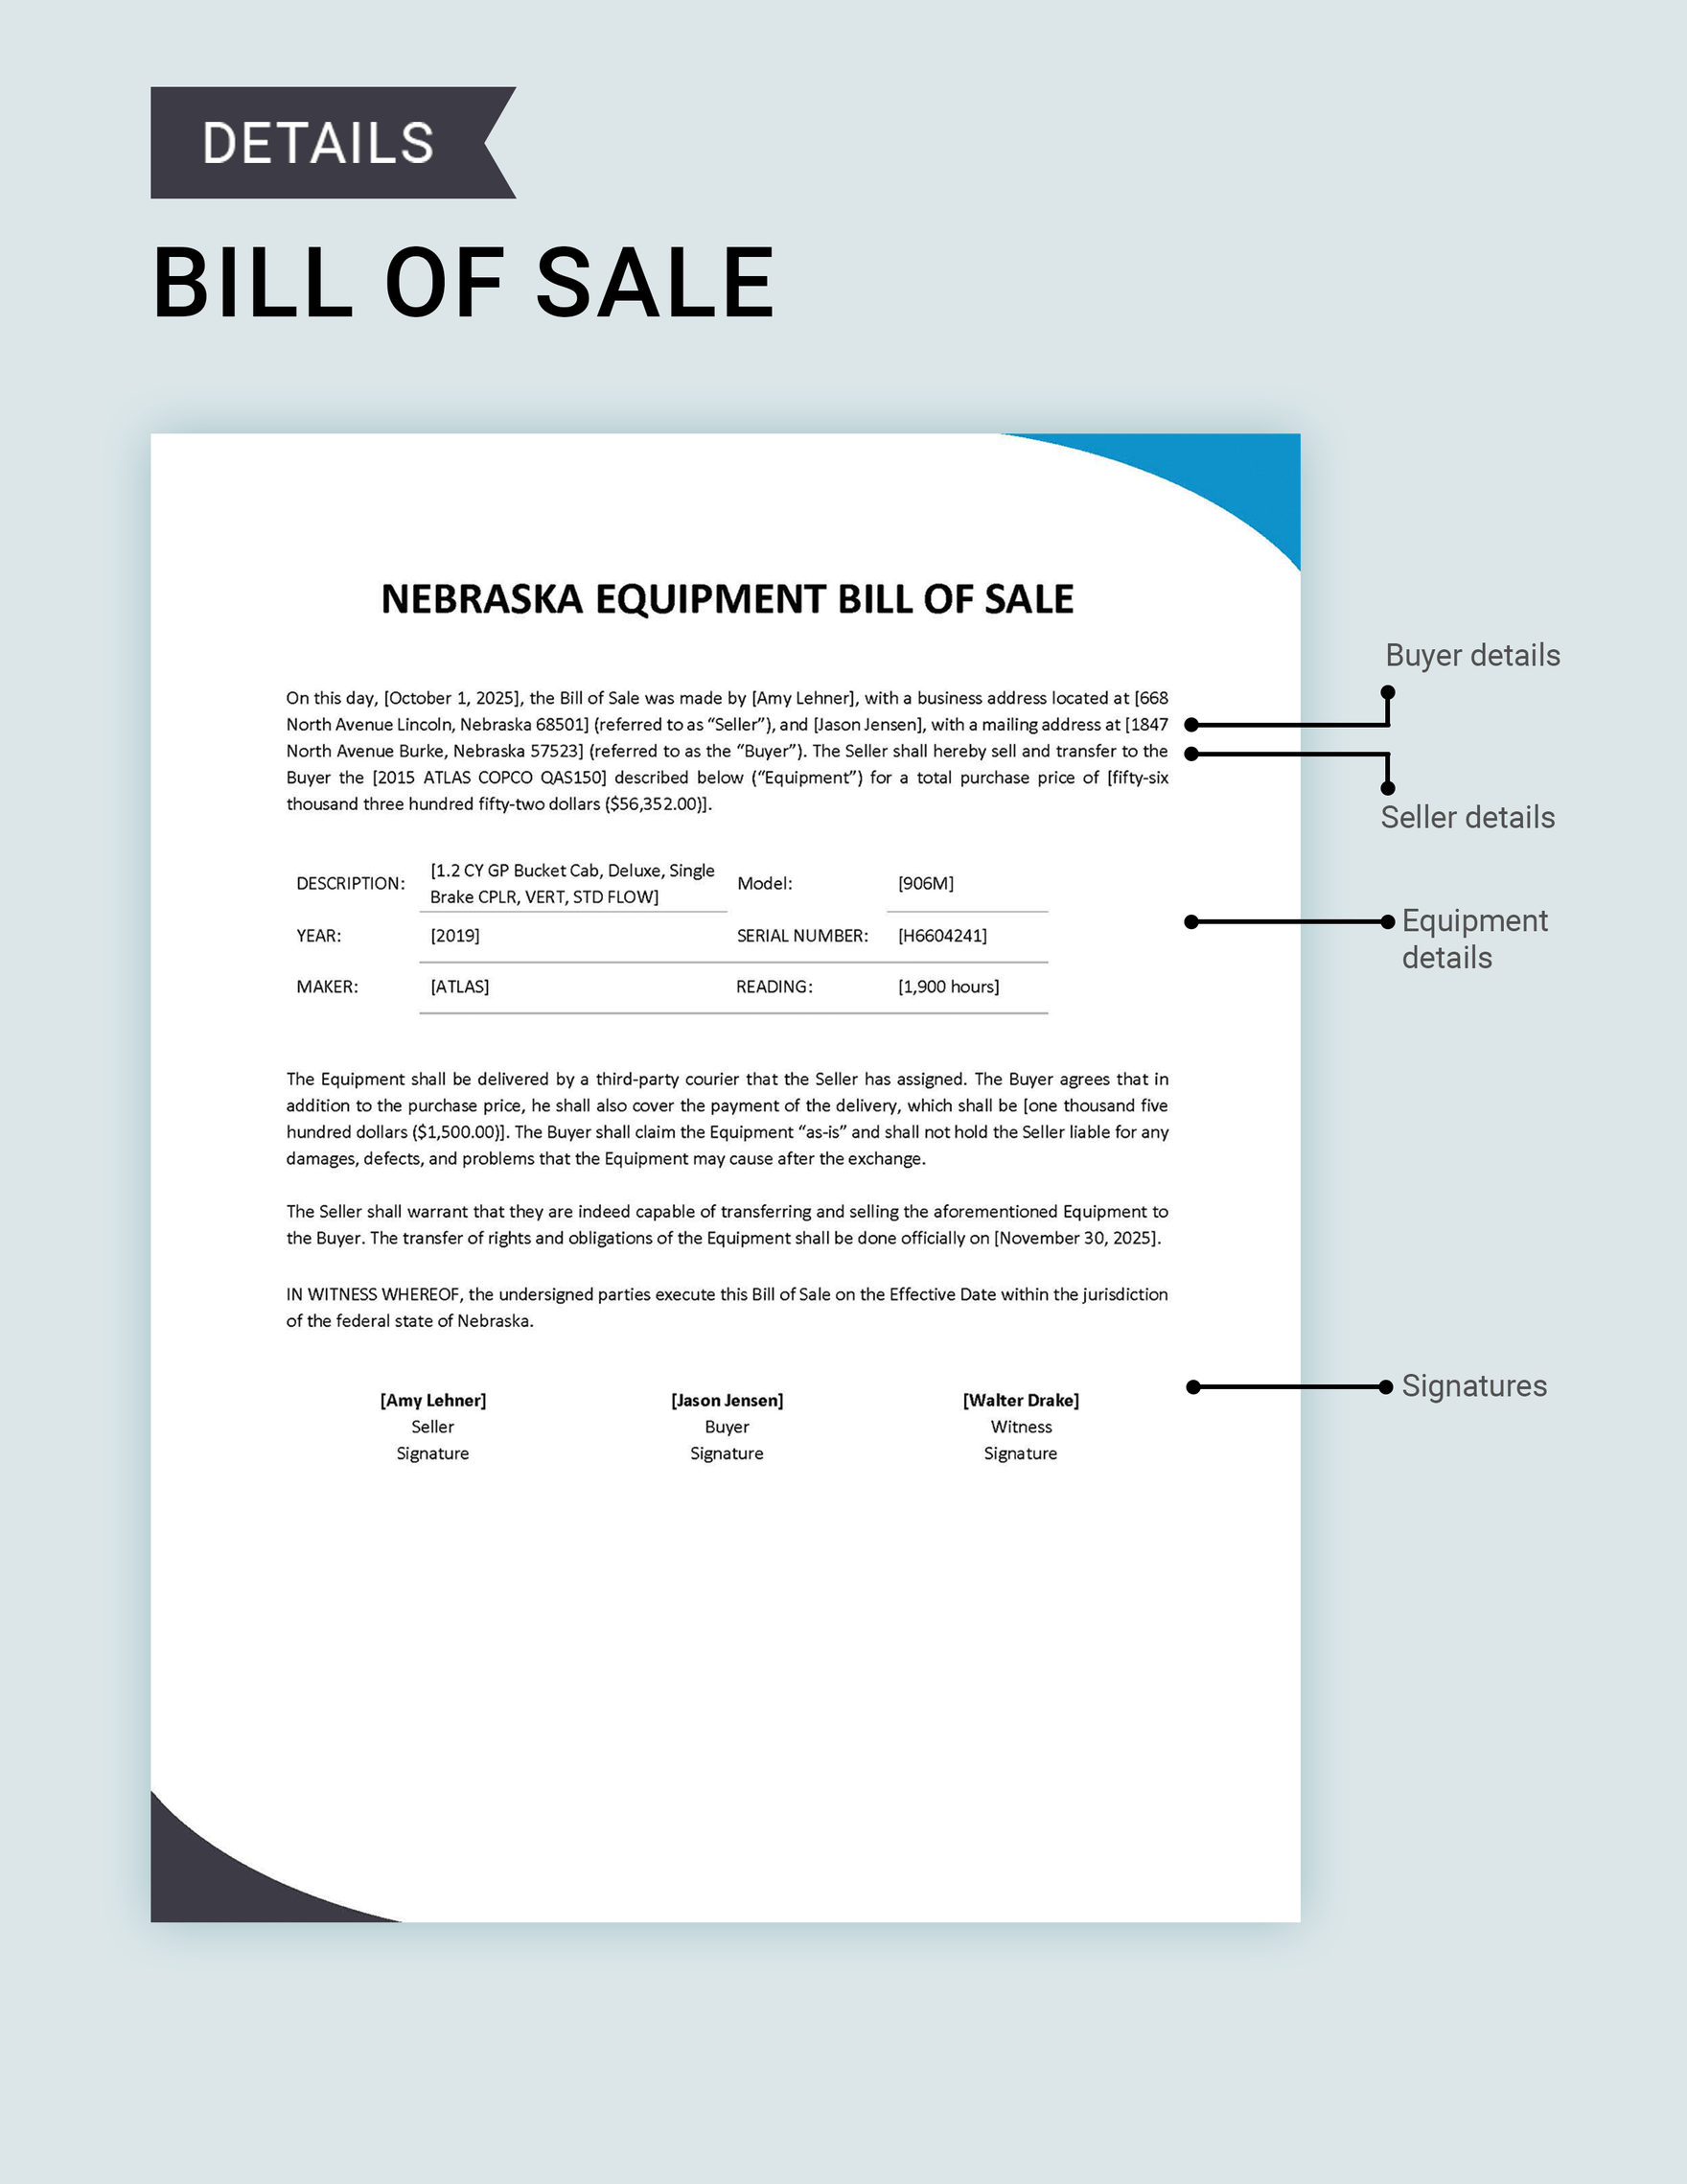 Nebraska Equipment Bill of Sale Template